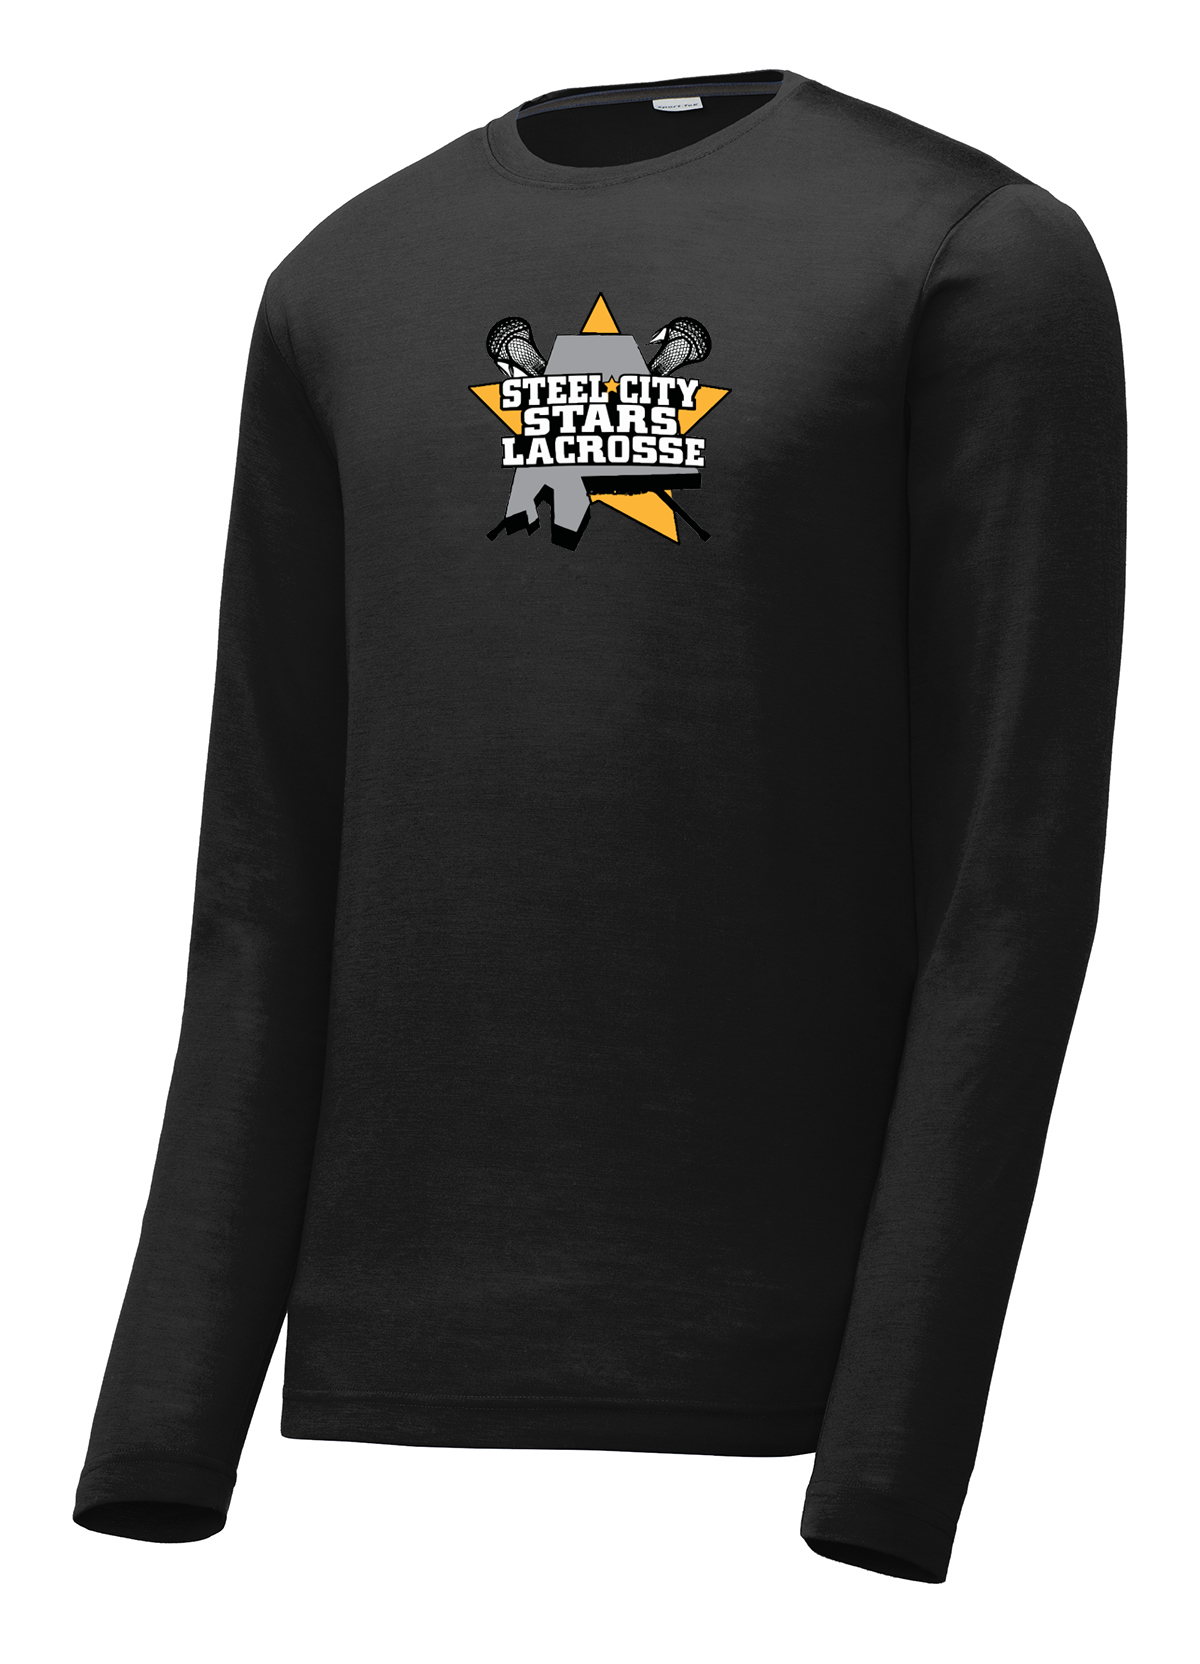 Stars Lacrosse Long Sleeve CottonTouch Performance Shirt